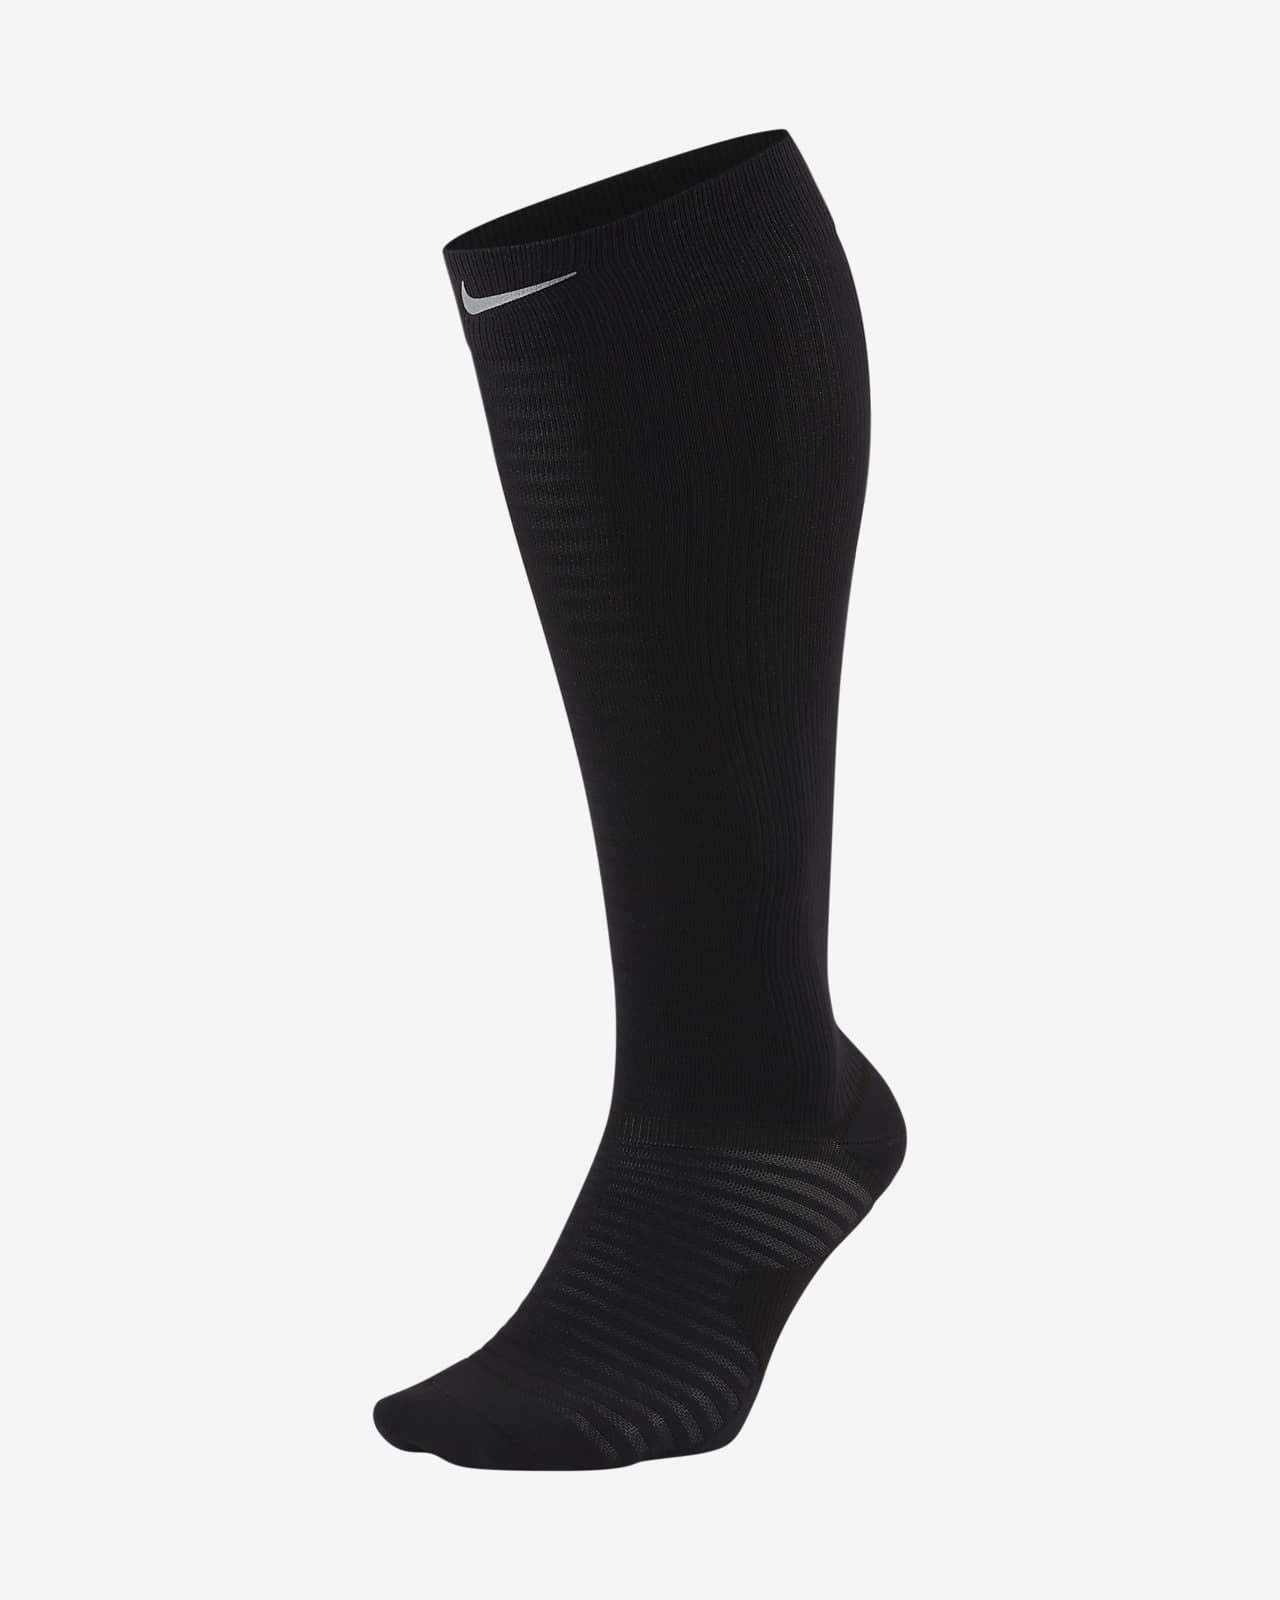 nike compression socks running